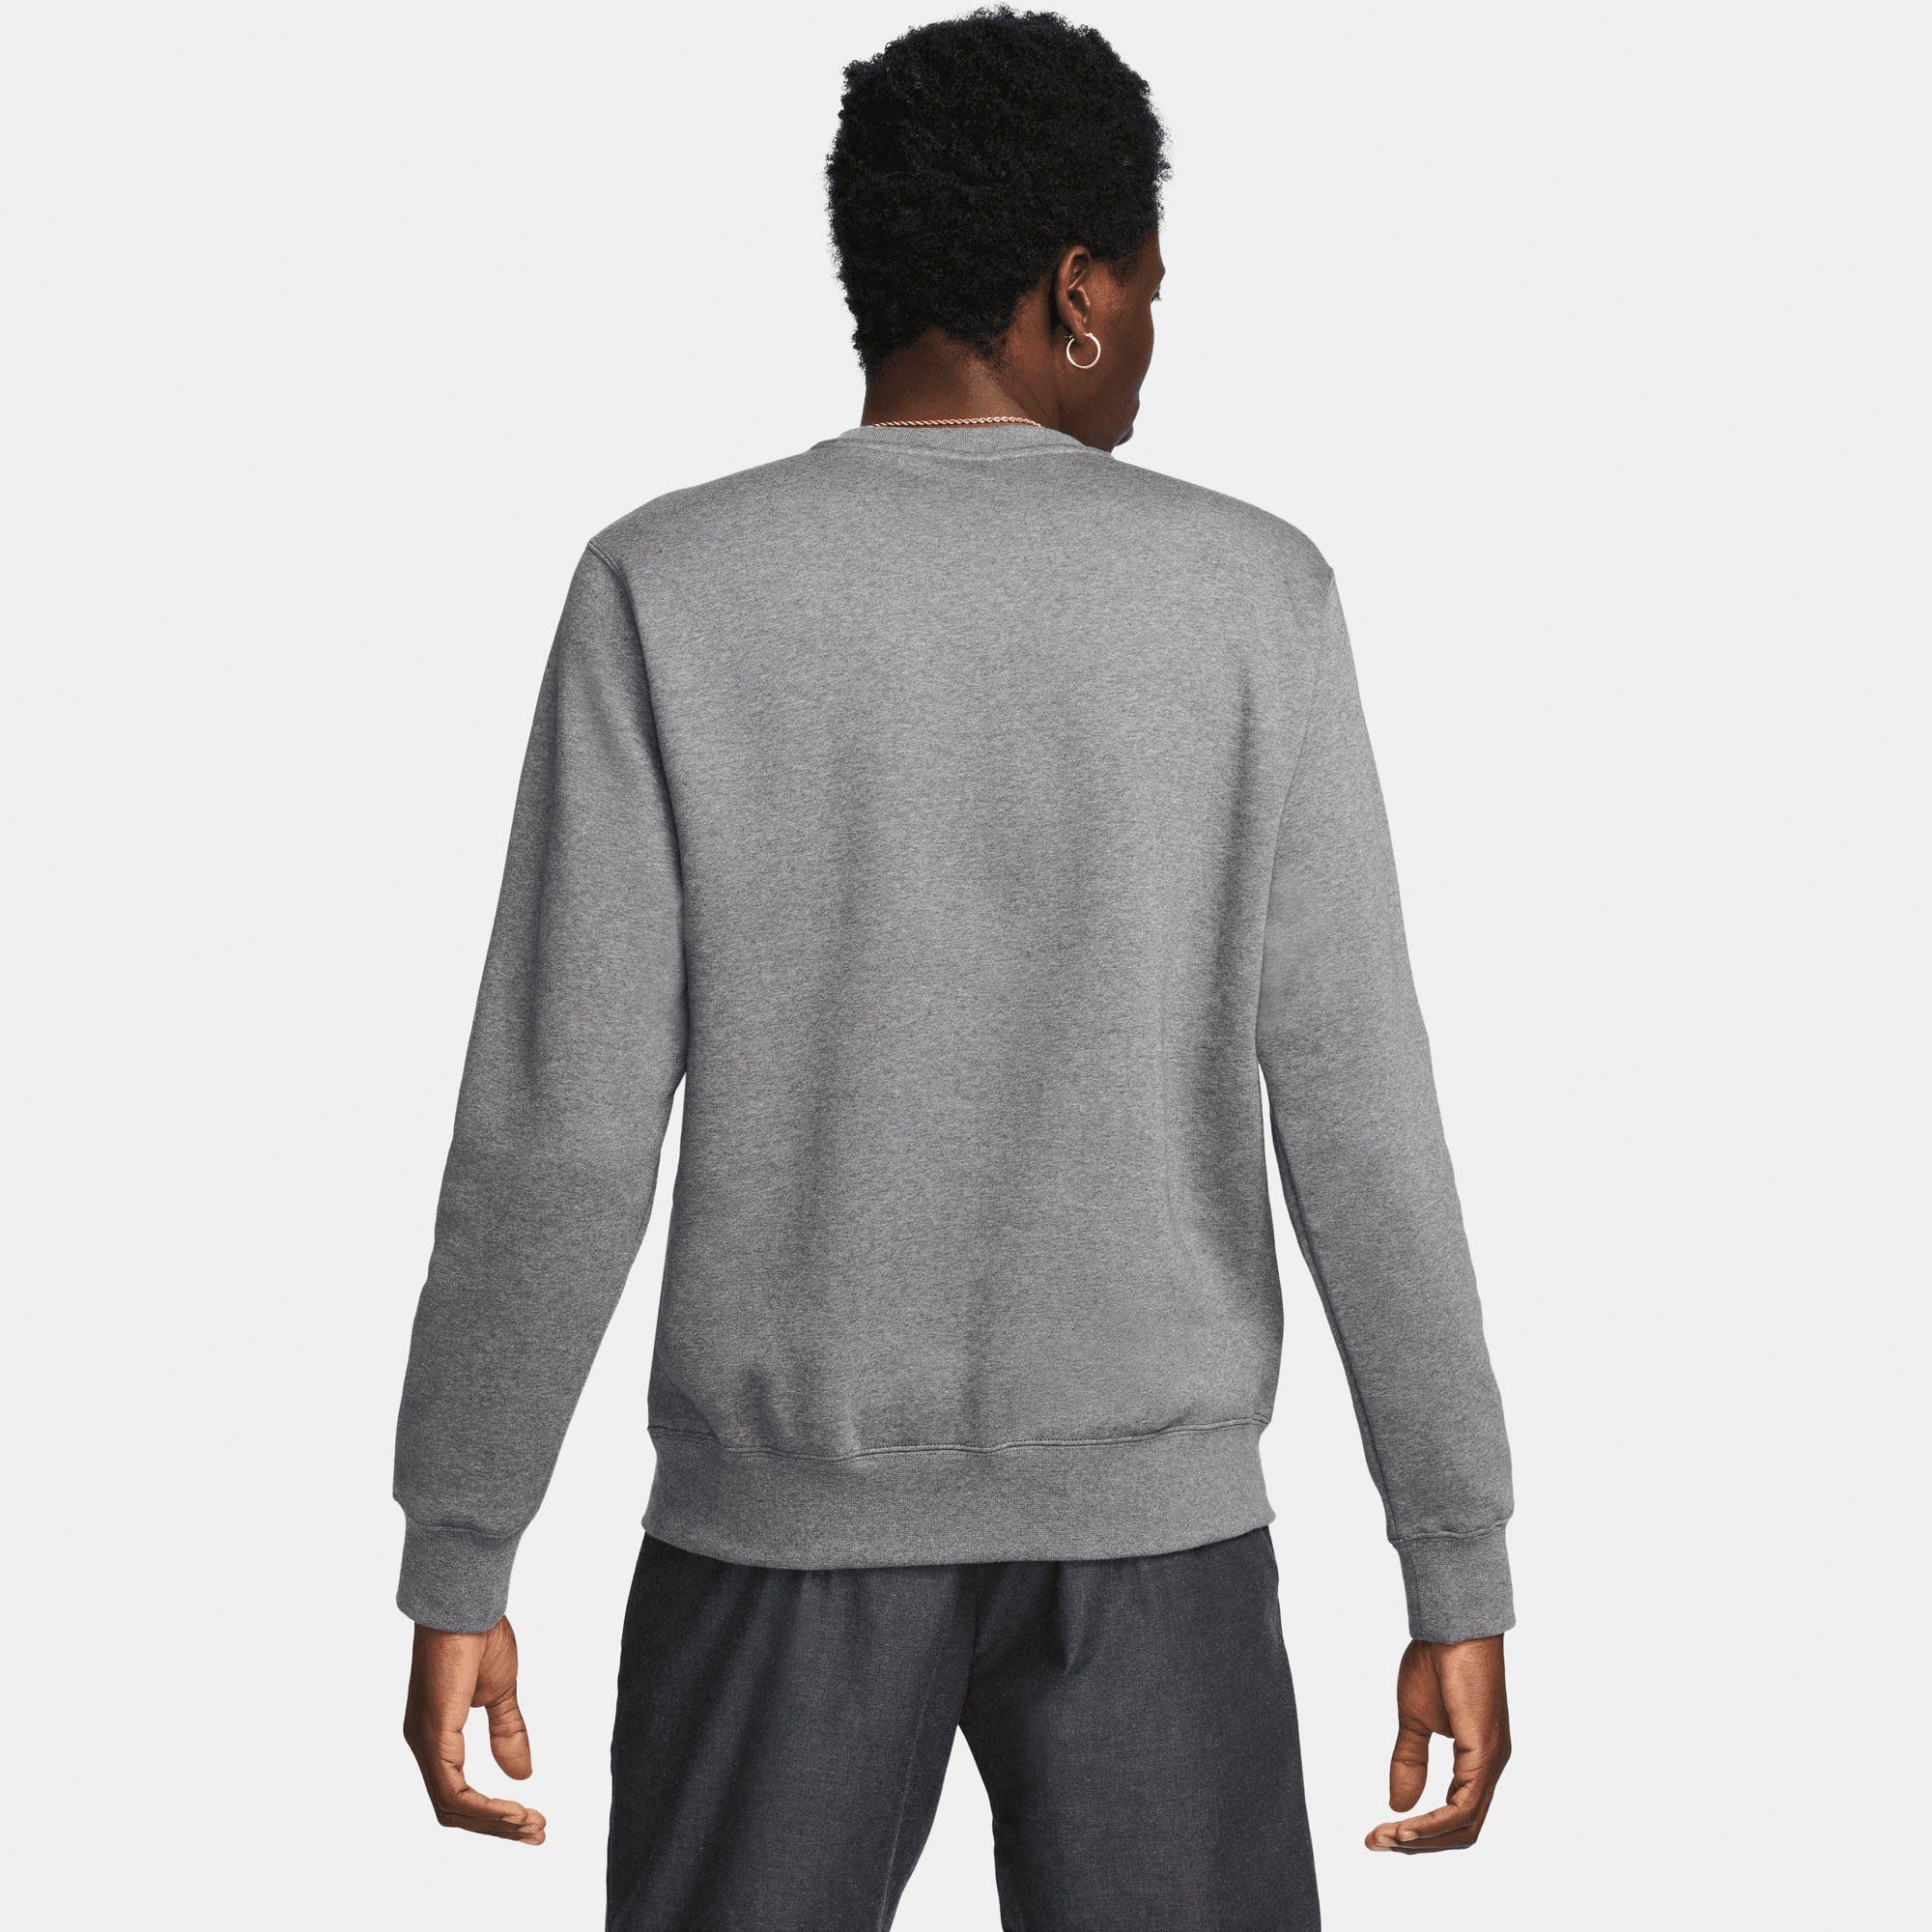 Nike Sportswear Sweatshirt Club Fleece Graphic Men's CHARCOAL Crew HEATHR